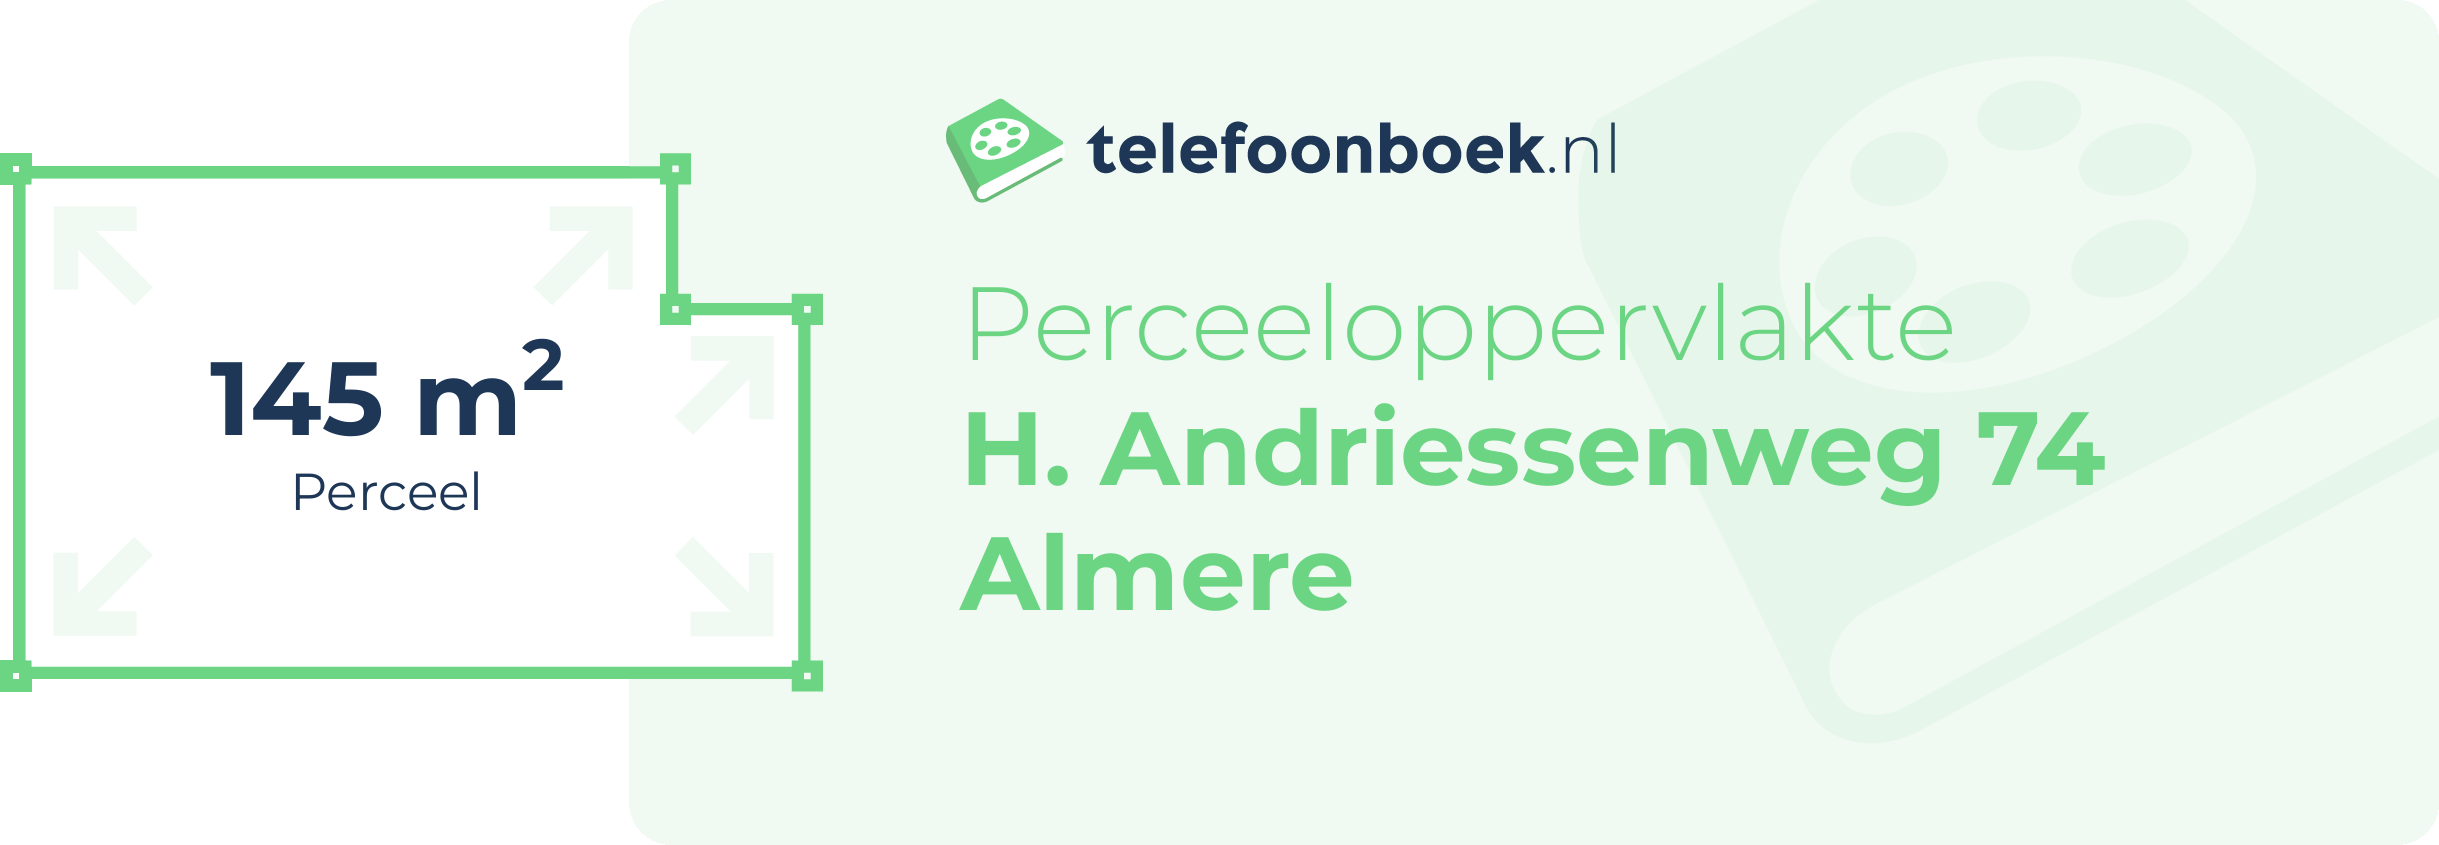 Perceeloppervlakte H. Andriessenweg 74 Almere